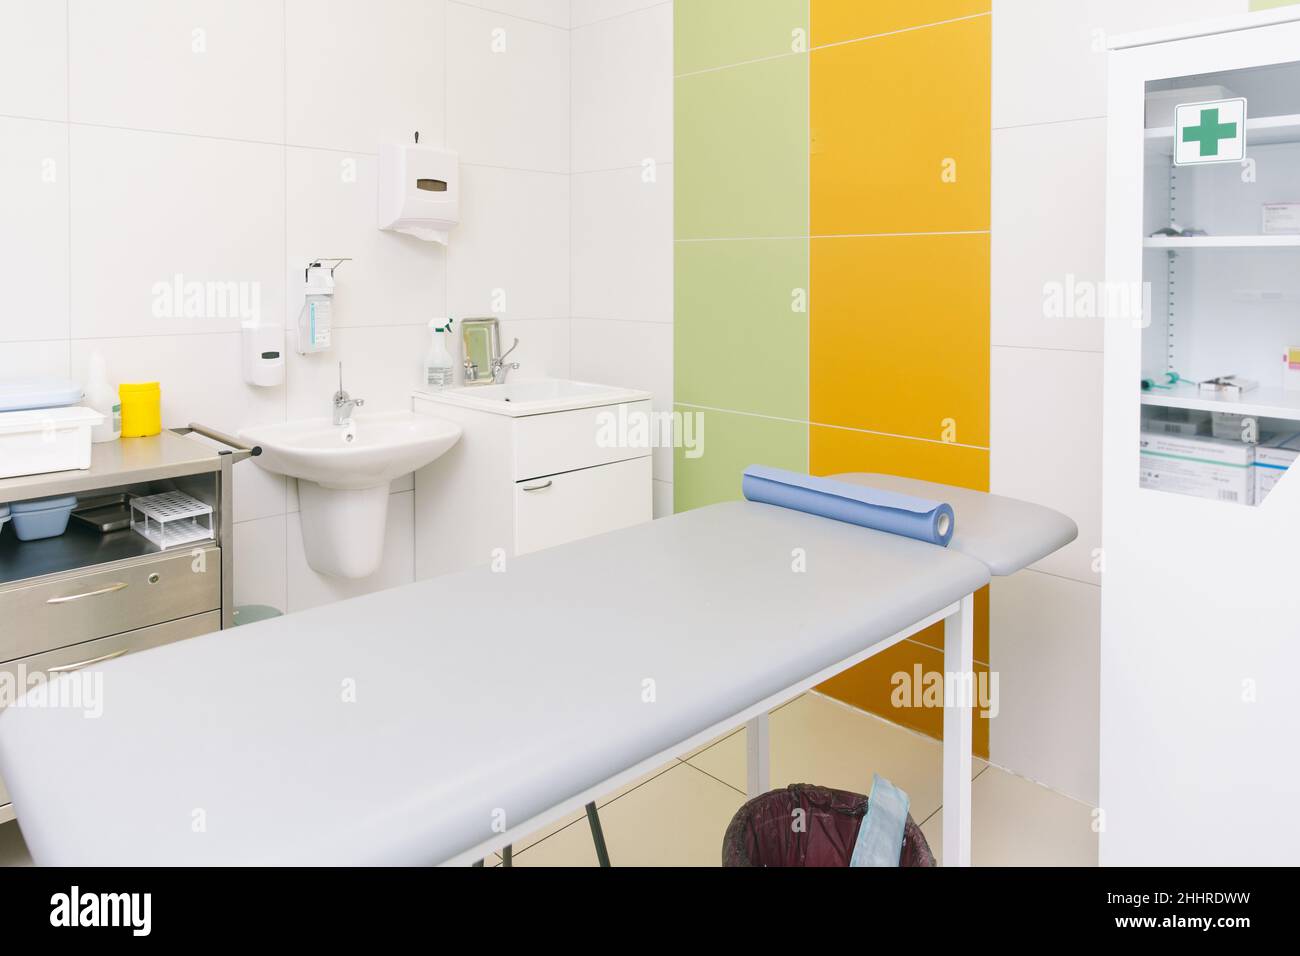 Hospital diagnostic room. Modern medical equipment, preventional medicine and healthcare concept. Modern hospital laboratory. Treatment room Stock Photo